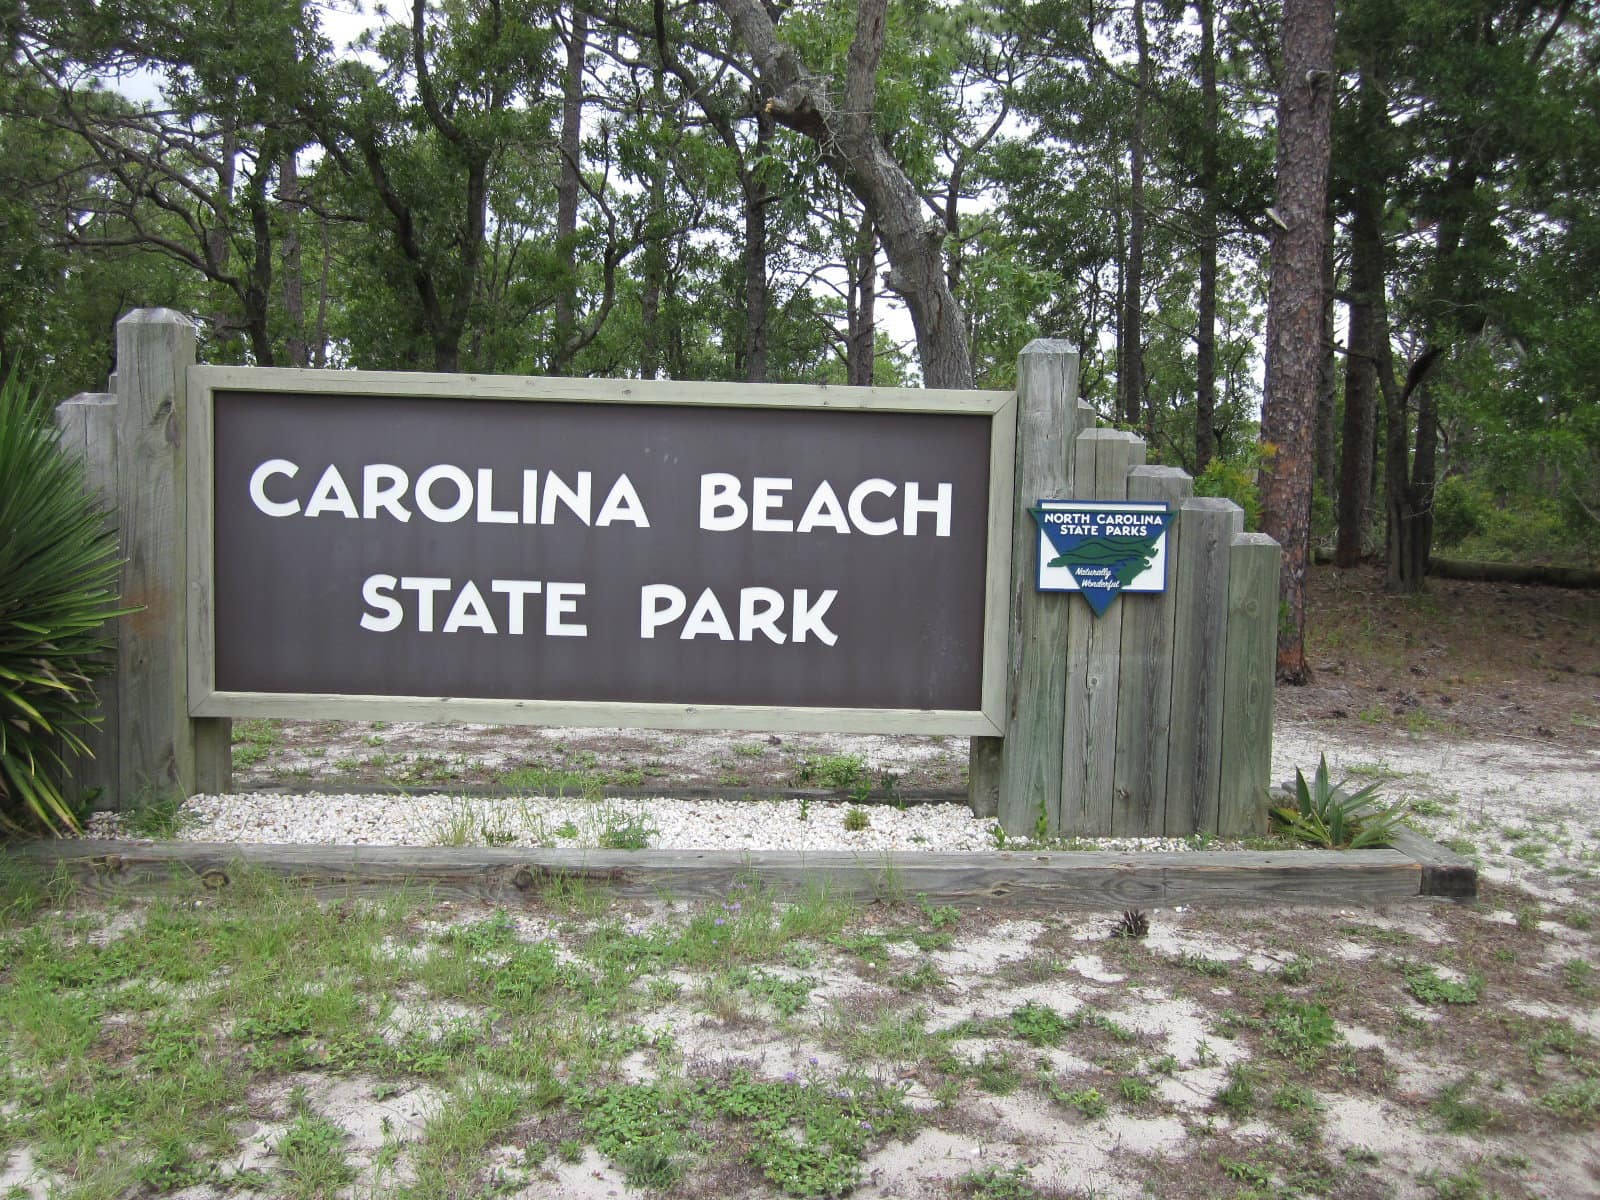 The entrance of the Carolina Beach State Park